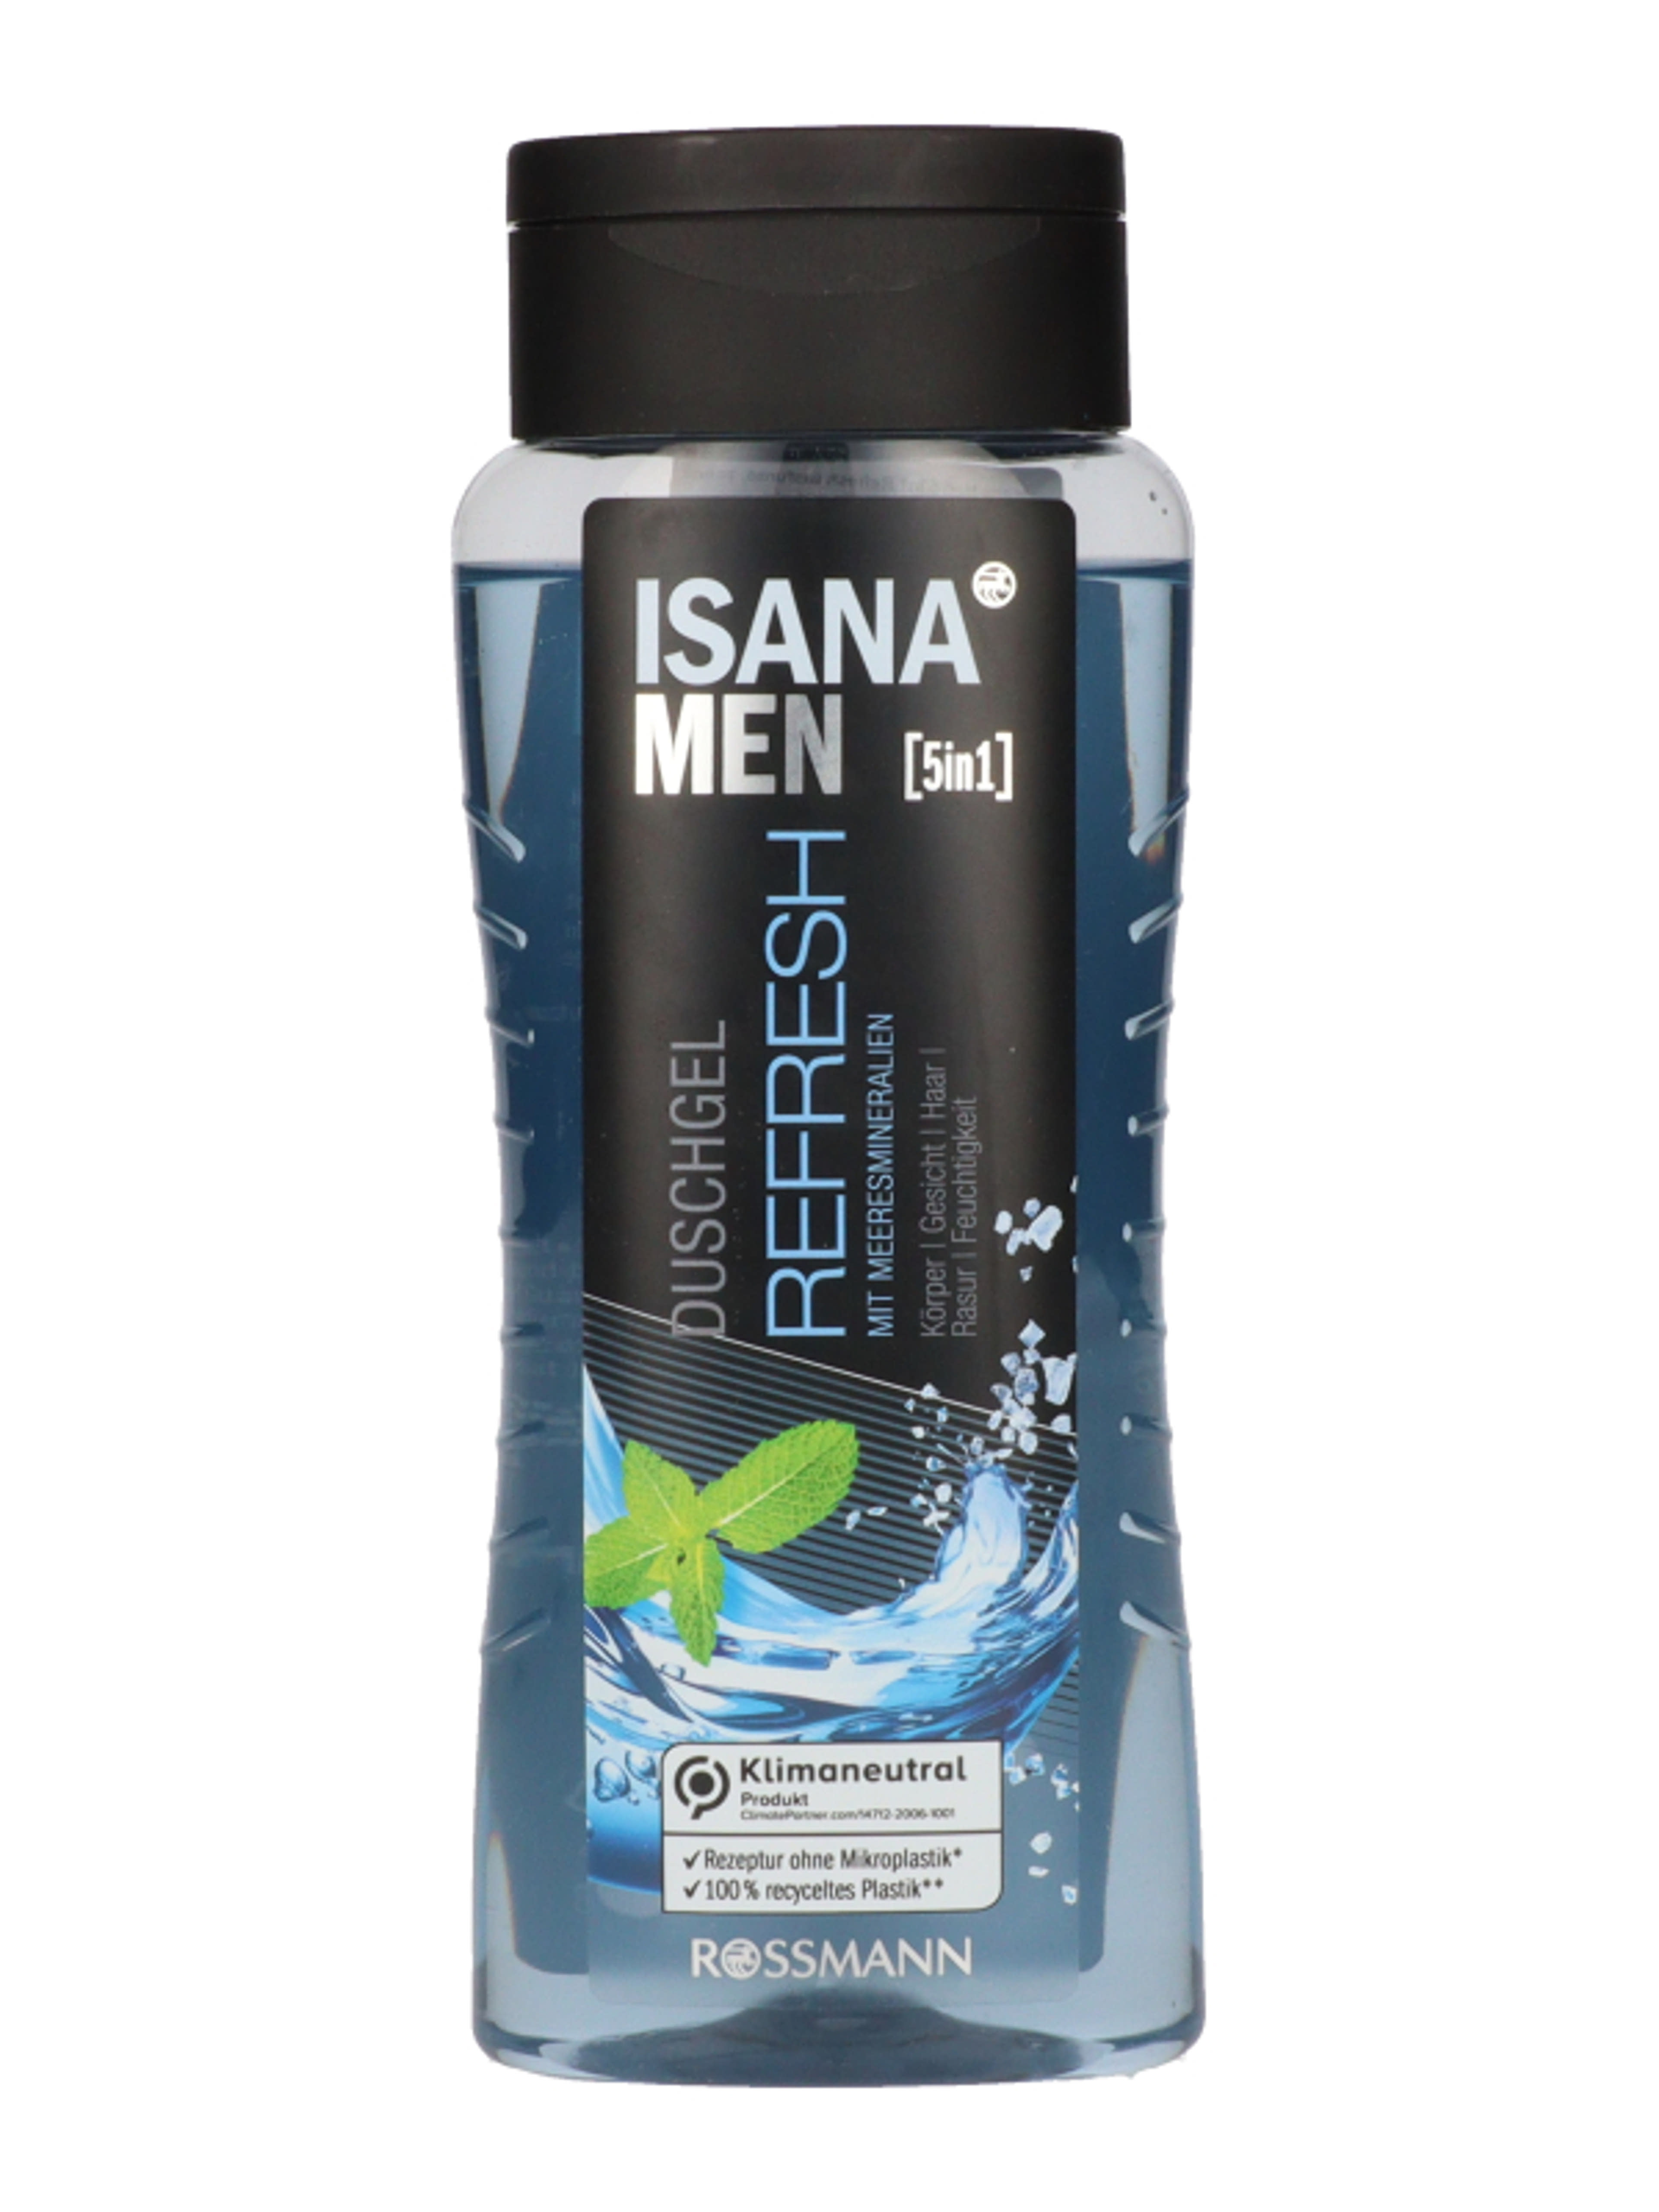 Isana Men tusfürdő 5in1 refresh - 300 ml-2